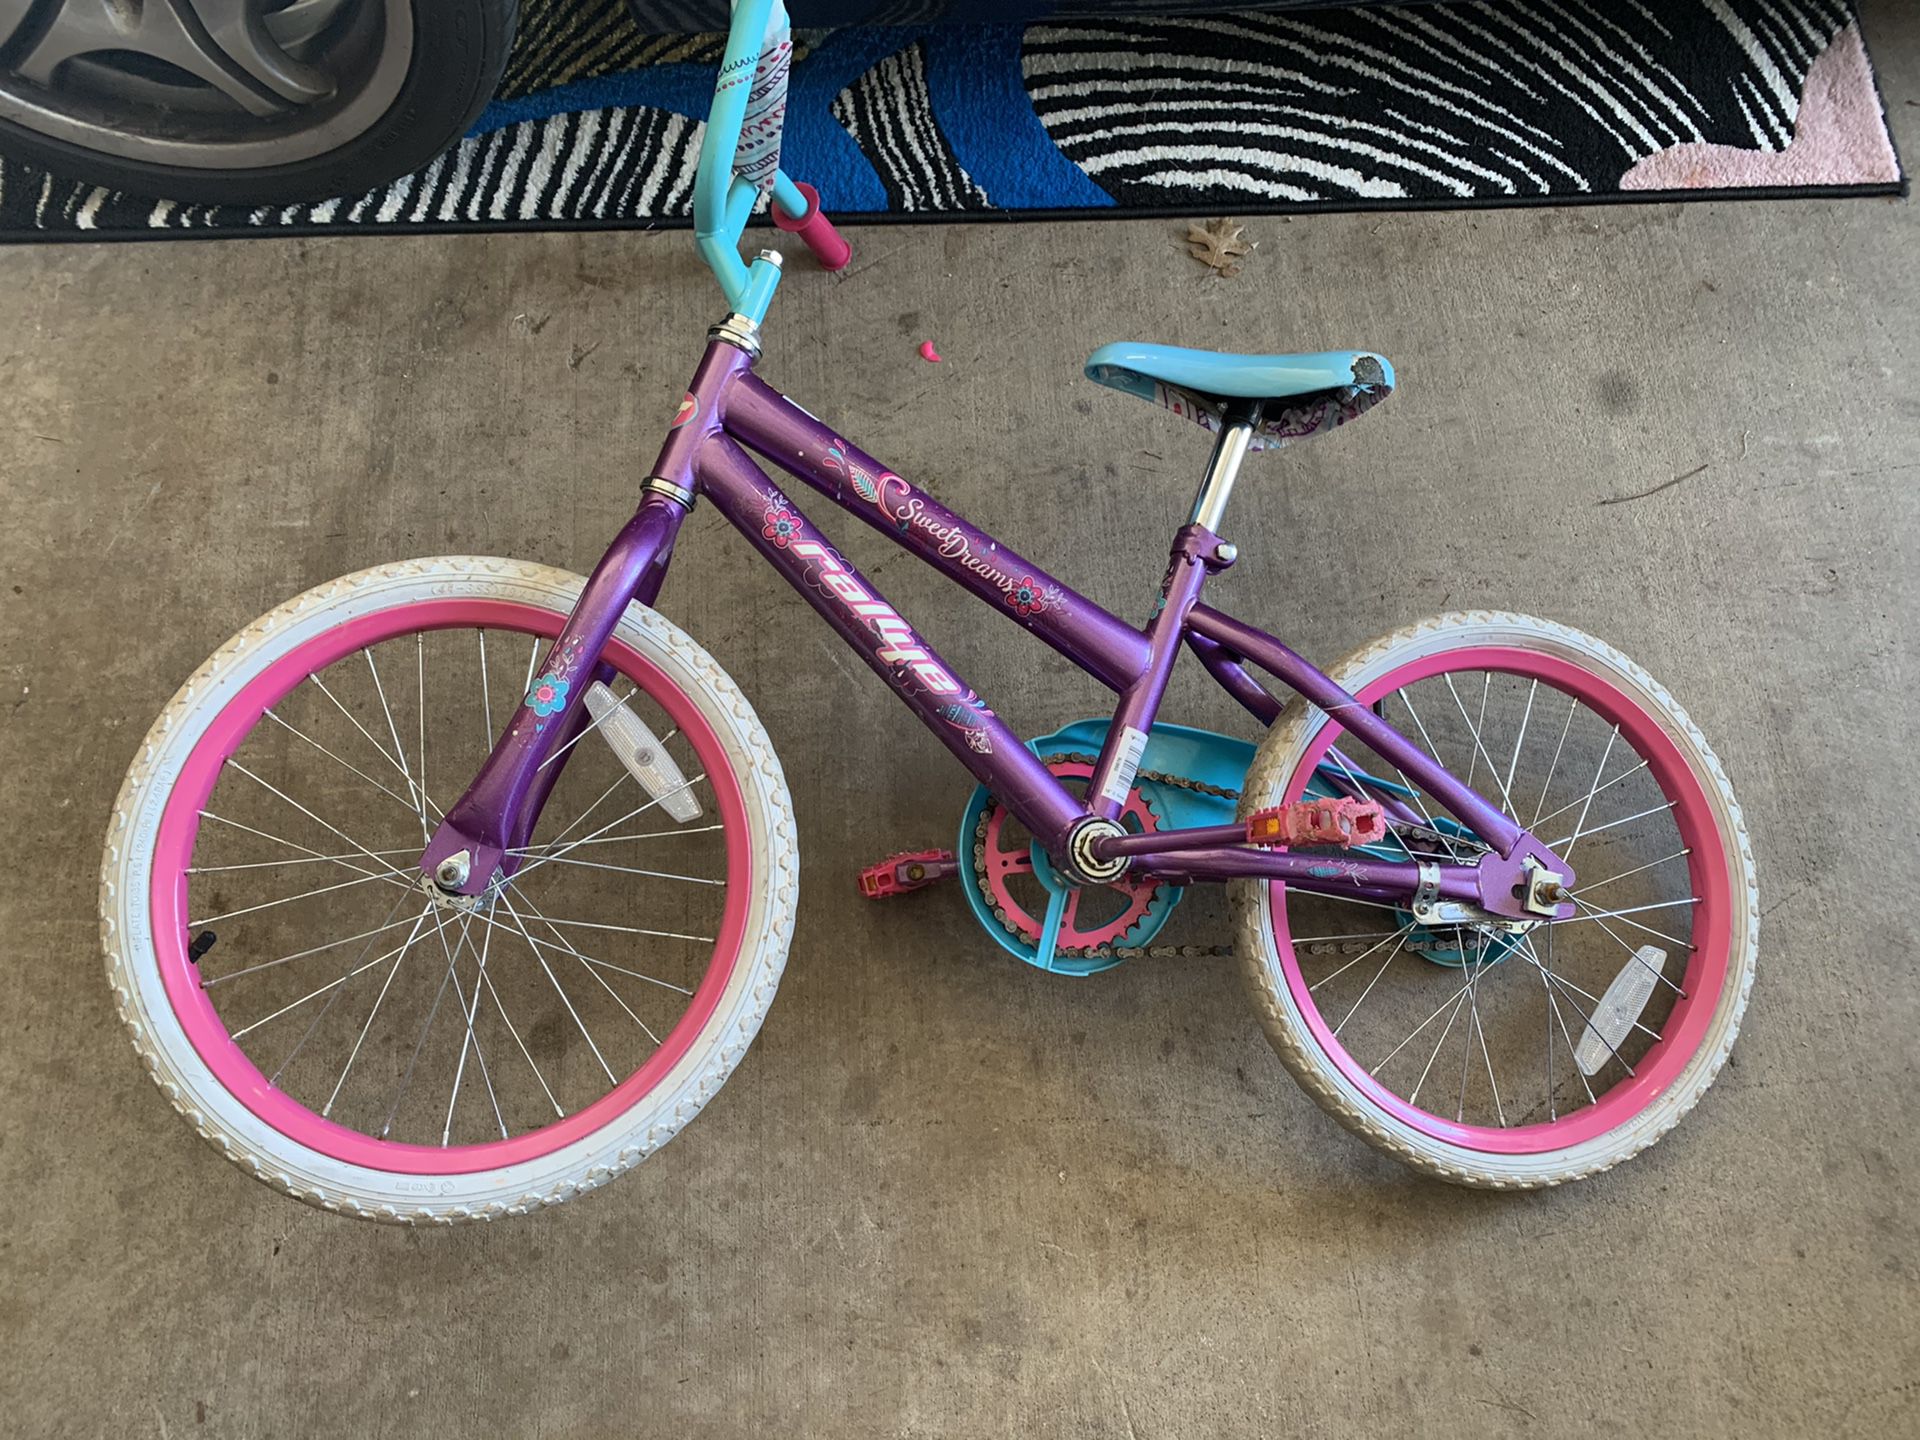 Girls purple bike